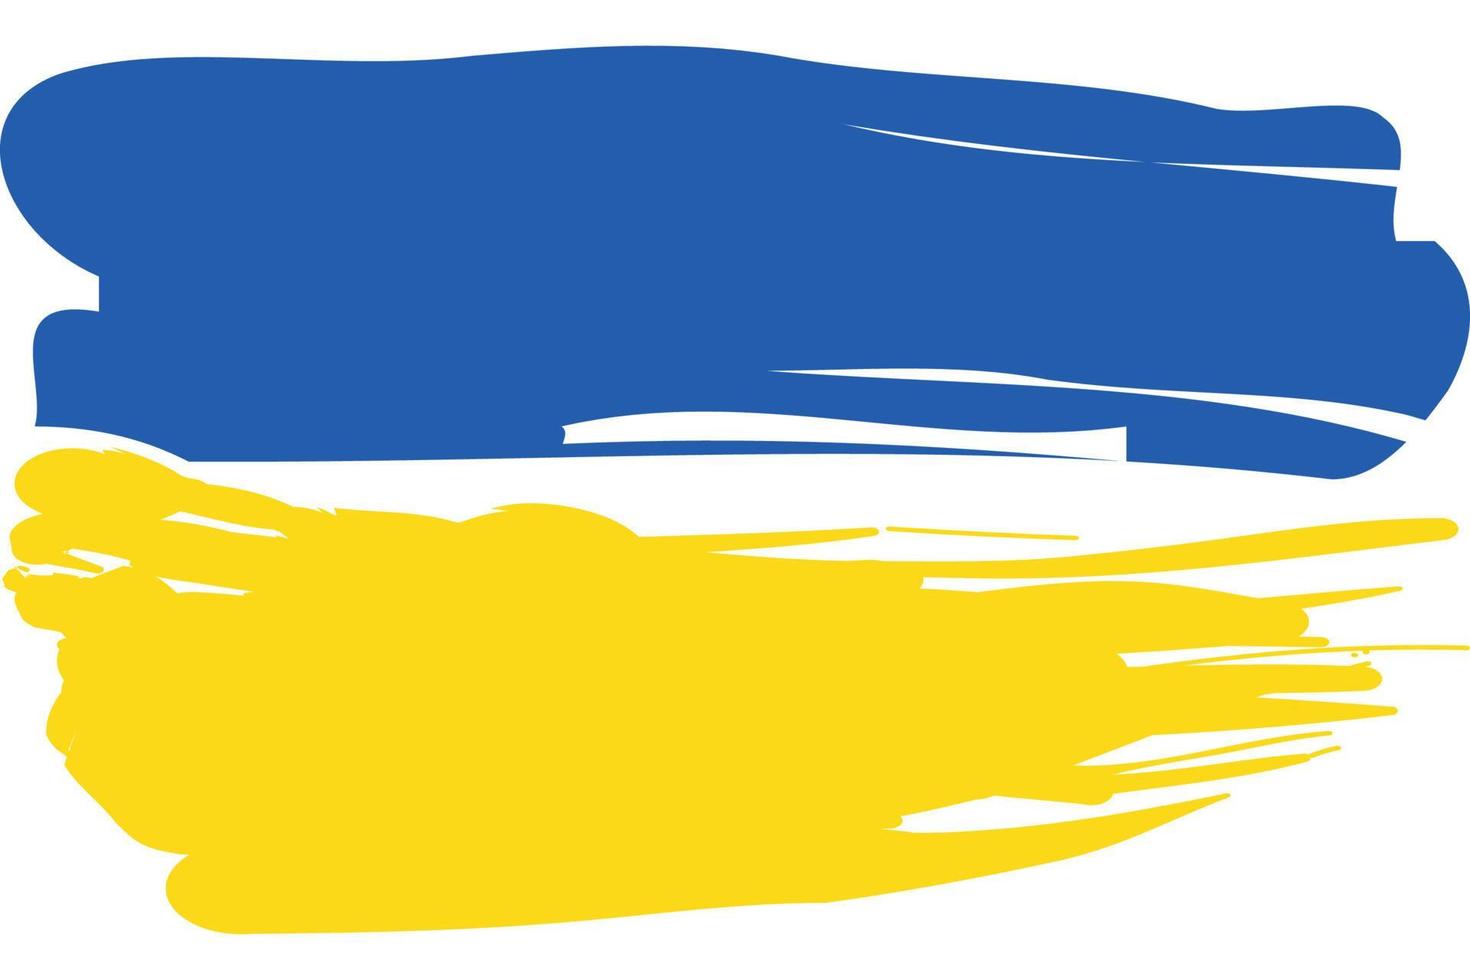 Ukraine flag brush concept. Flag of Ukraine. National symbol. Ukrainian flag symbol. Blue and yellow illustration. Stock vector illustration